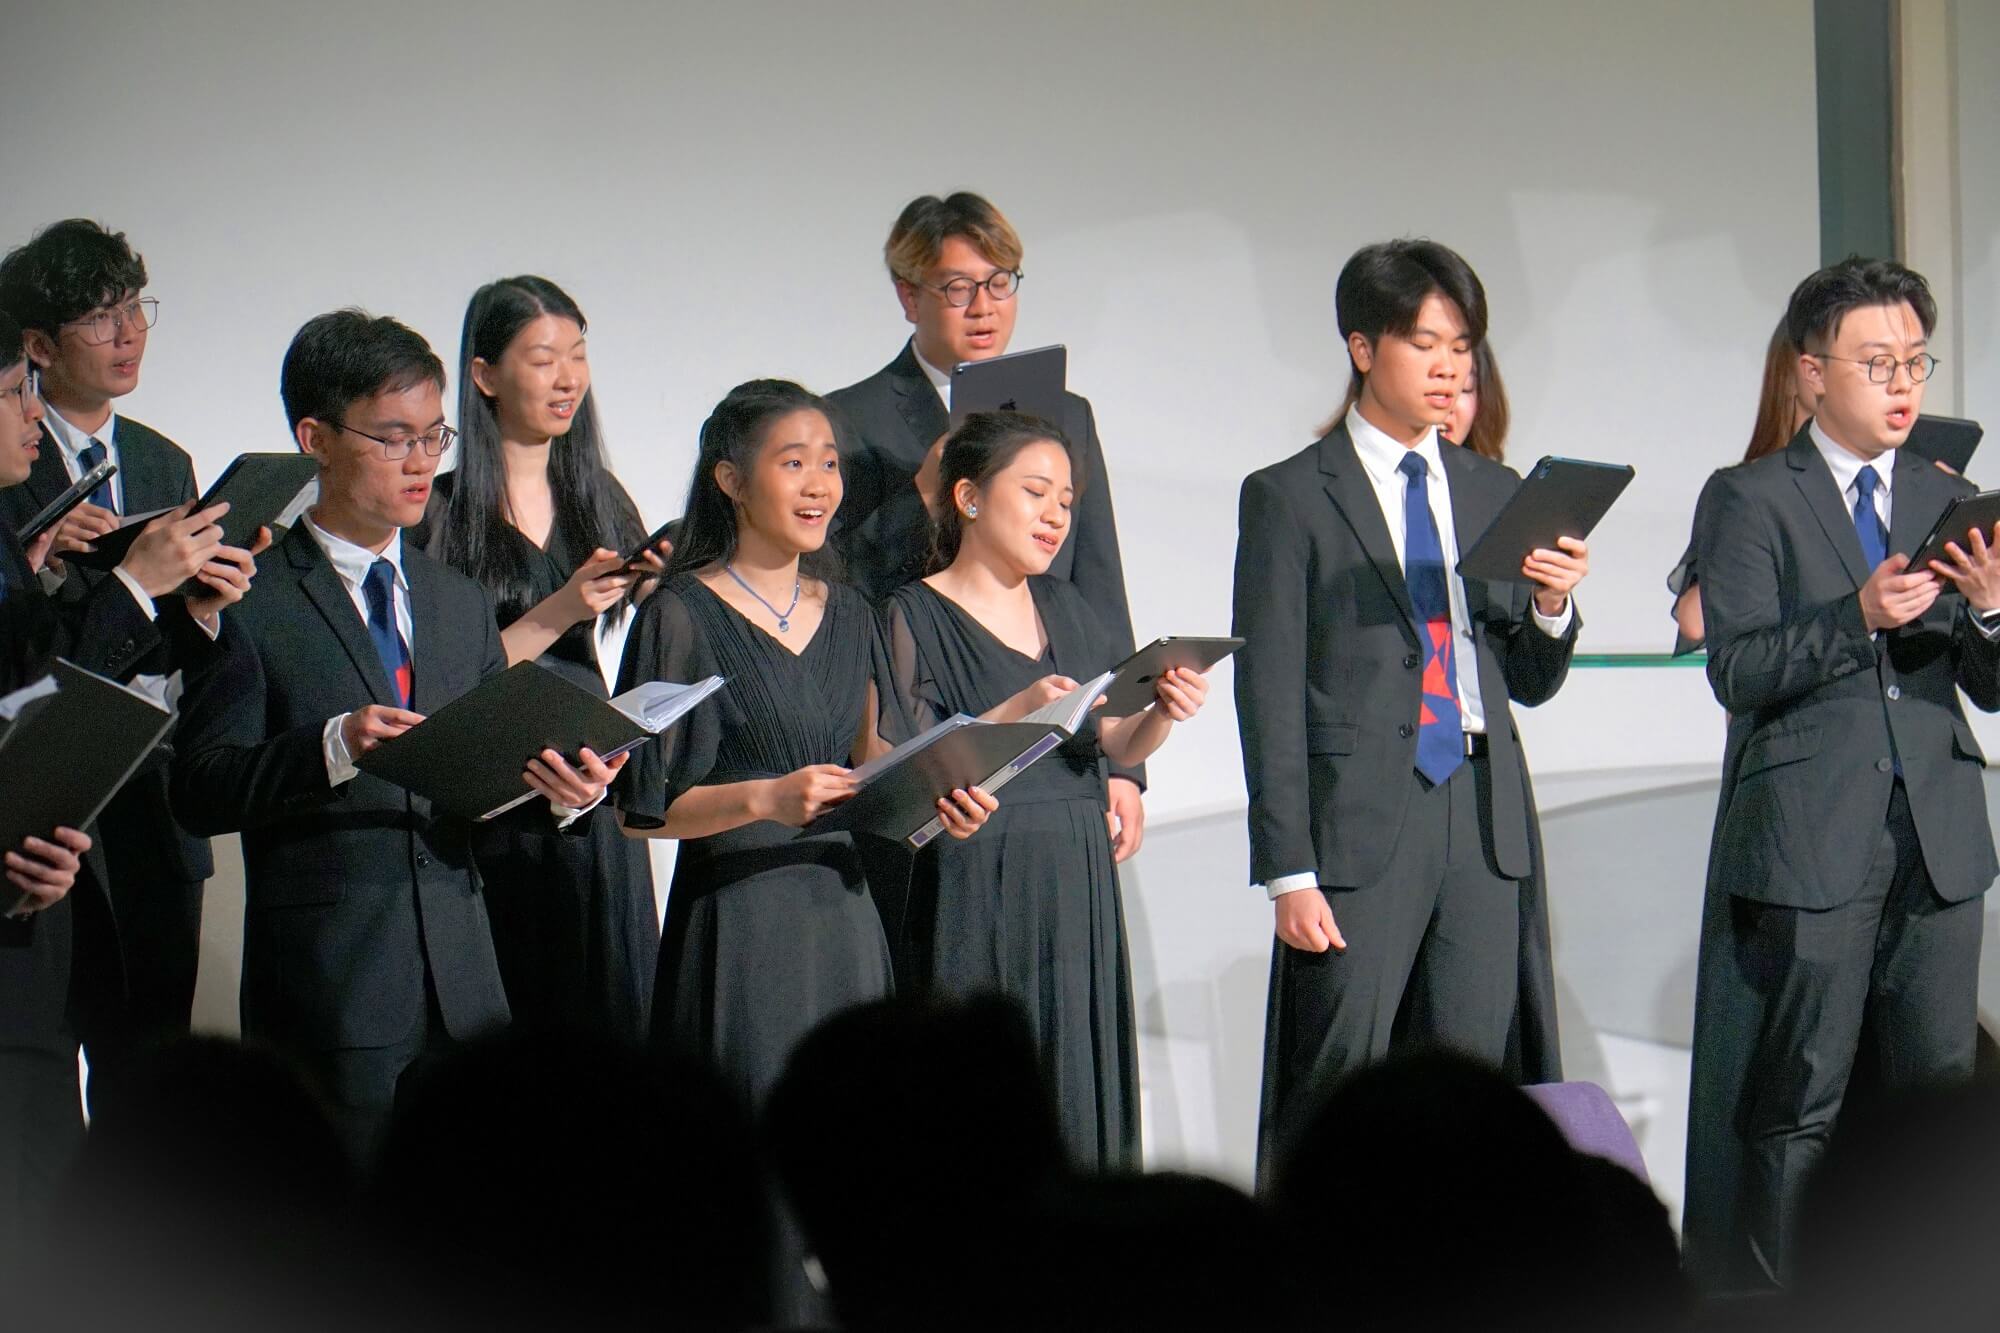 CityUHK Choir Annual Performance 2023/24 "Songs of the Earth"